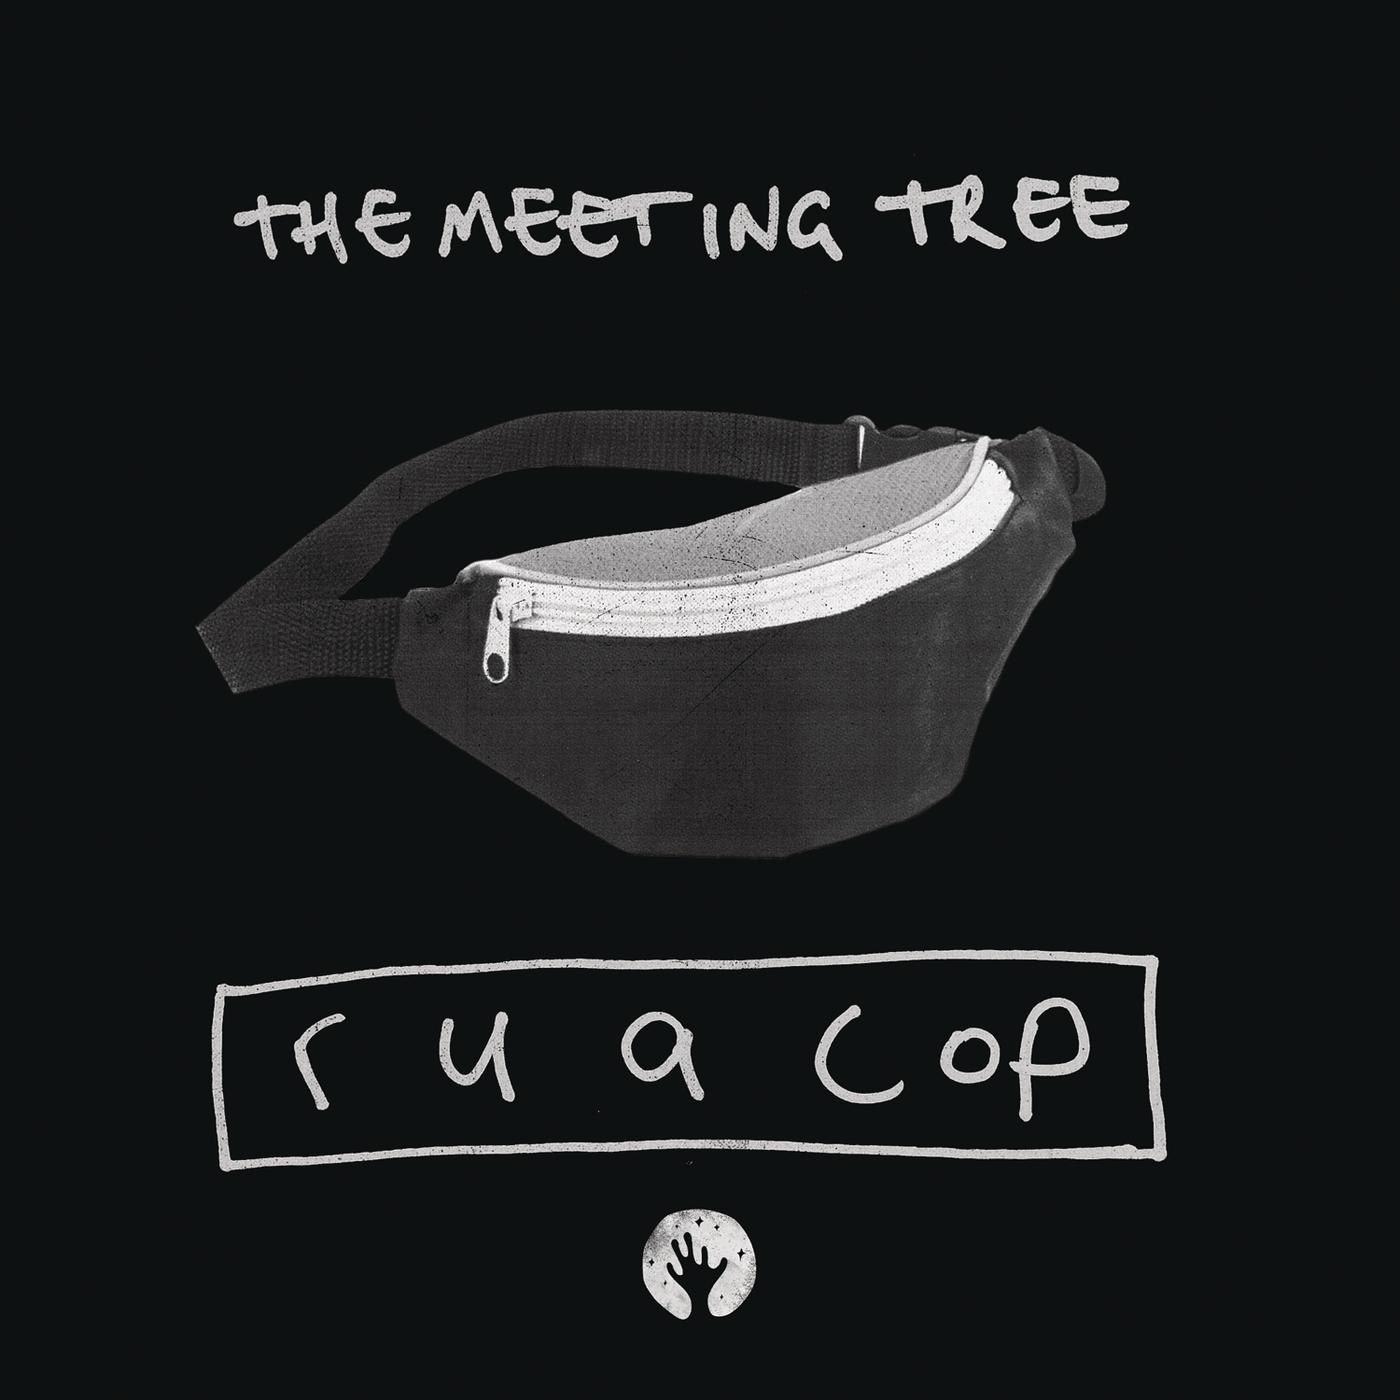 The Meeting Tree - r u a cop